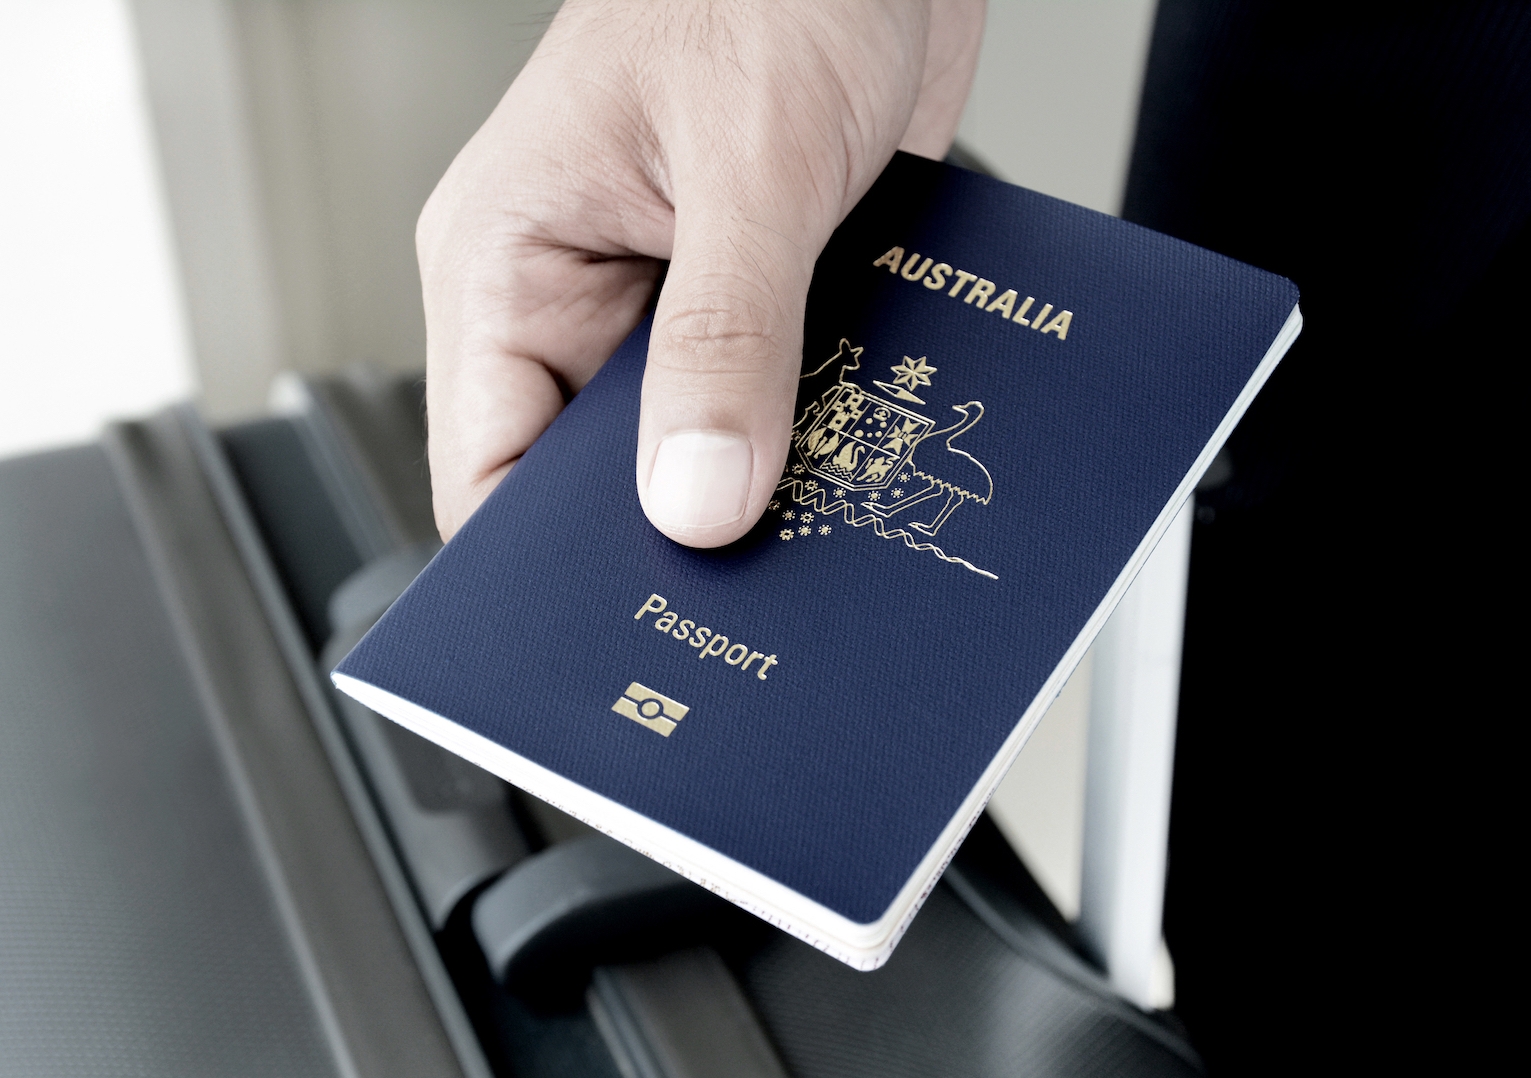 Need to renew your passport? The weird history of Australian passports